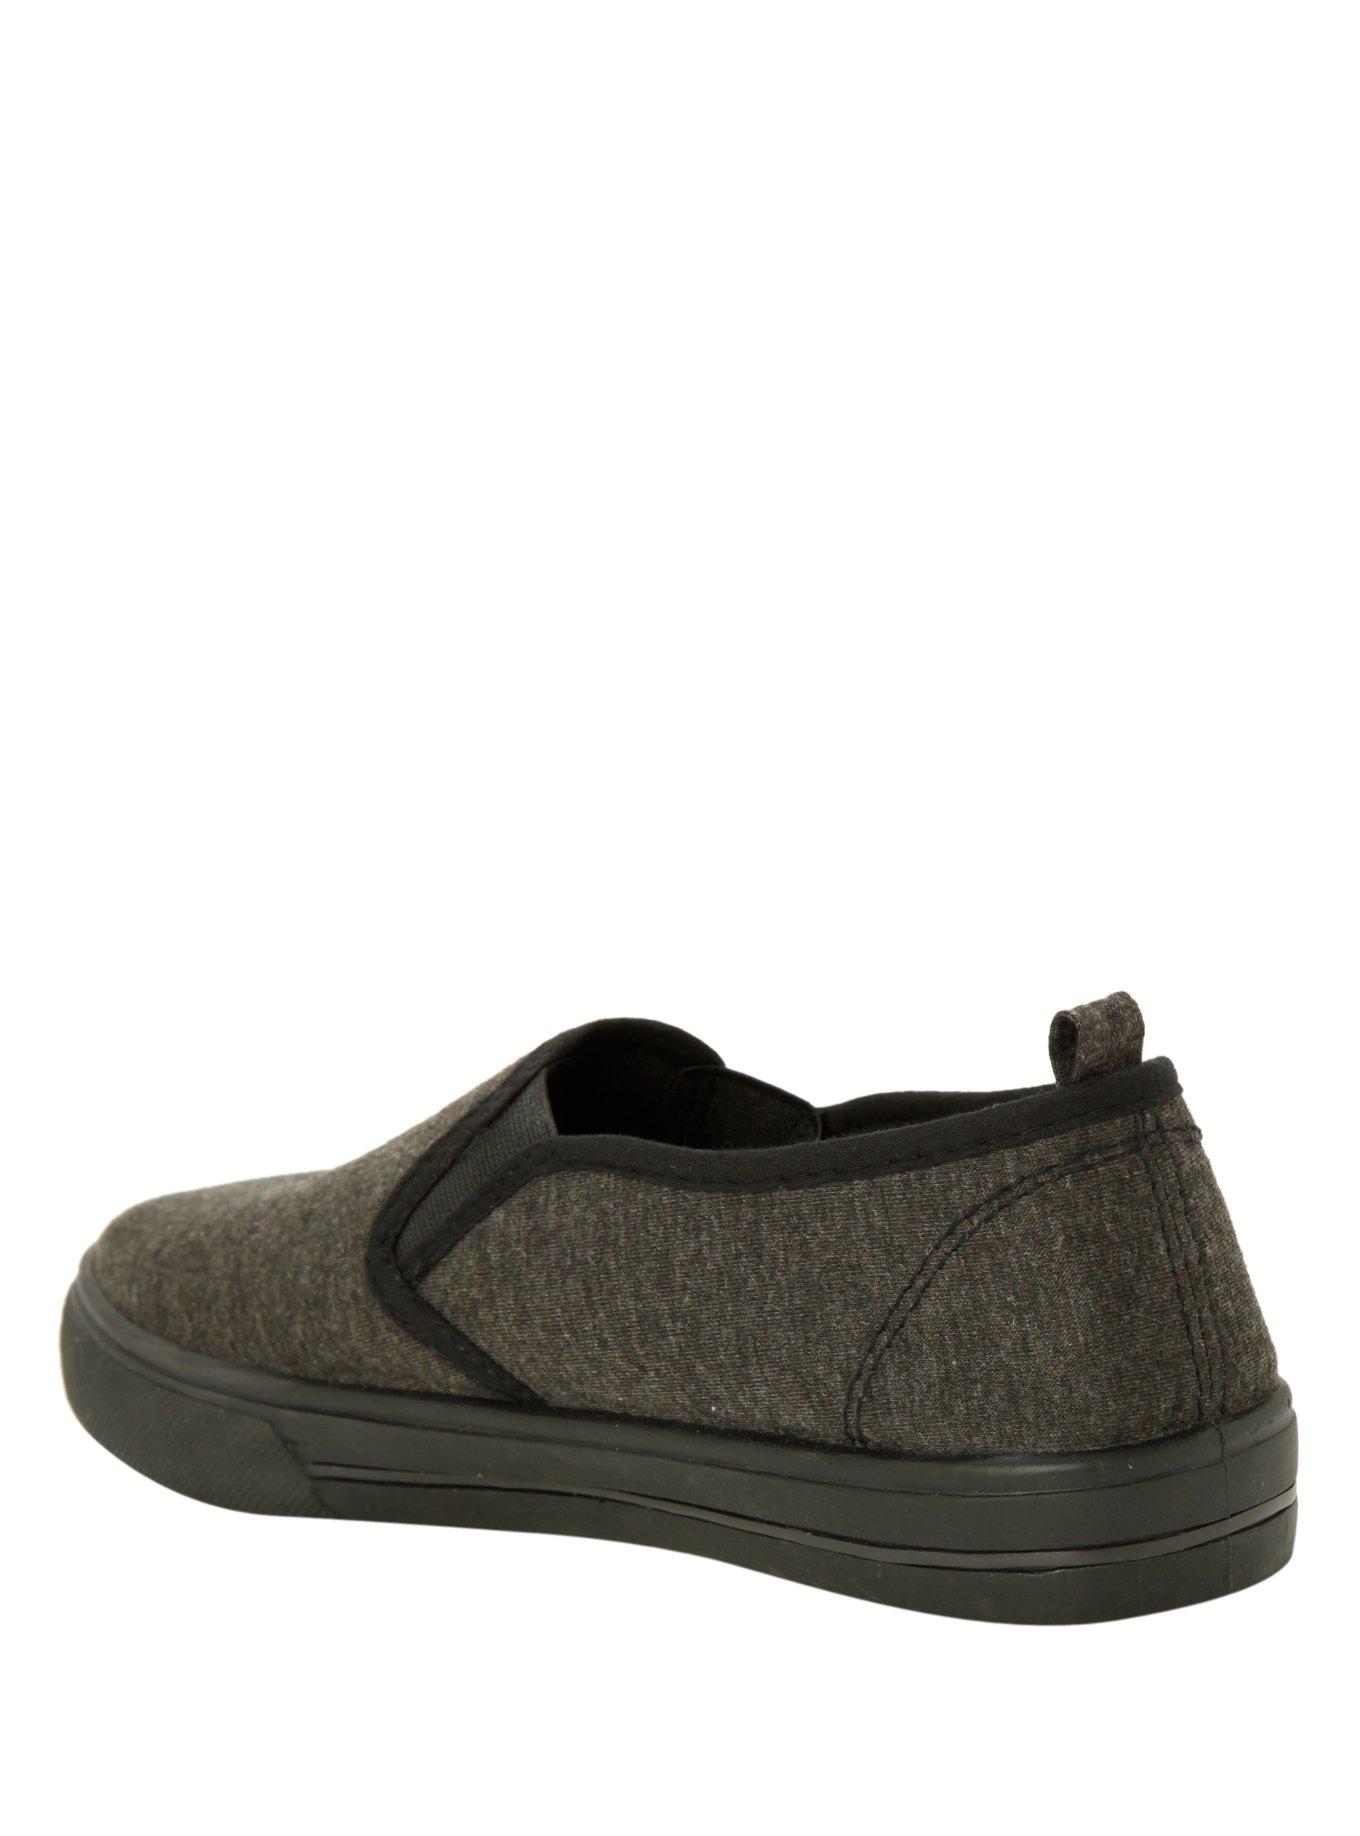 Grey Slip-On Shoes, BLACK, alternate